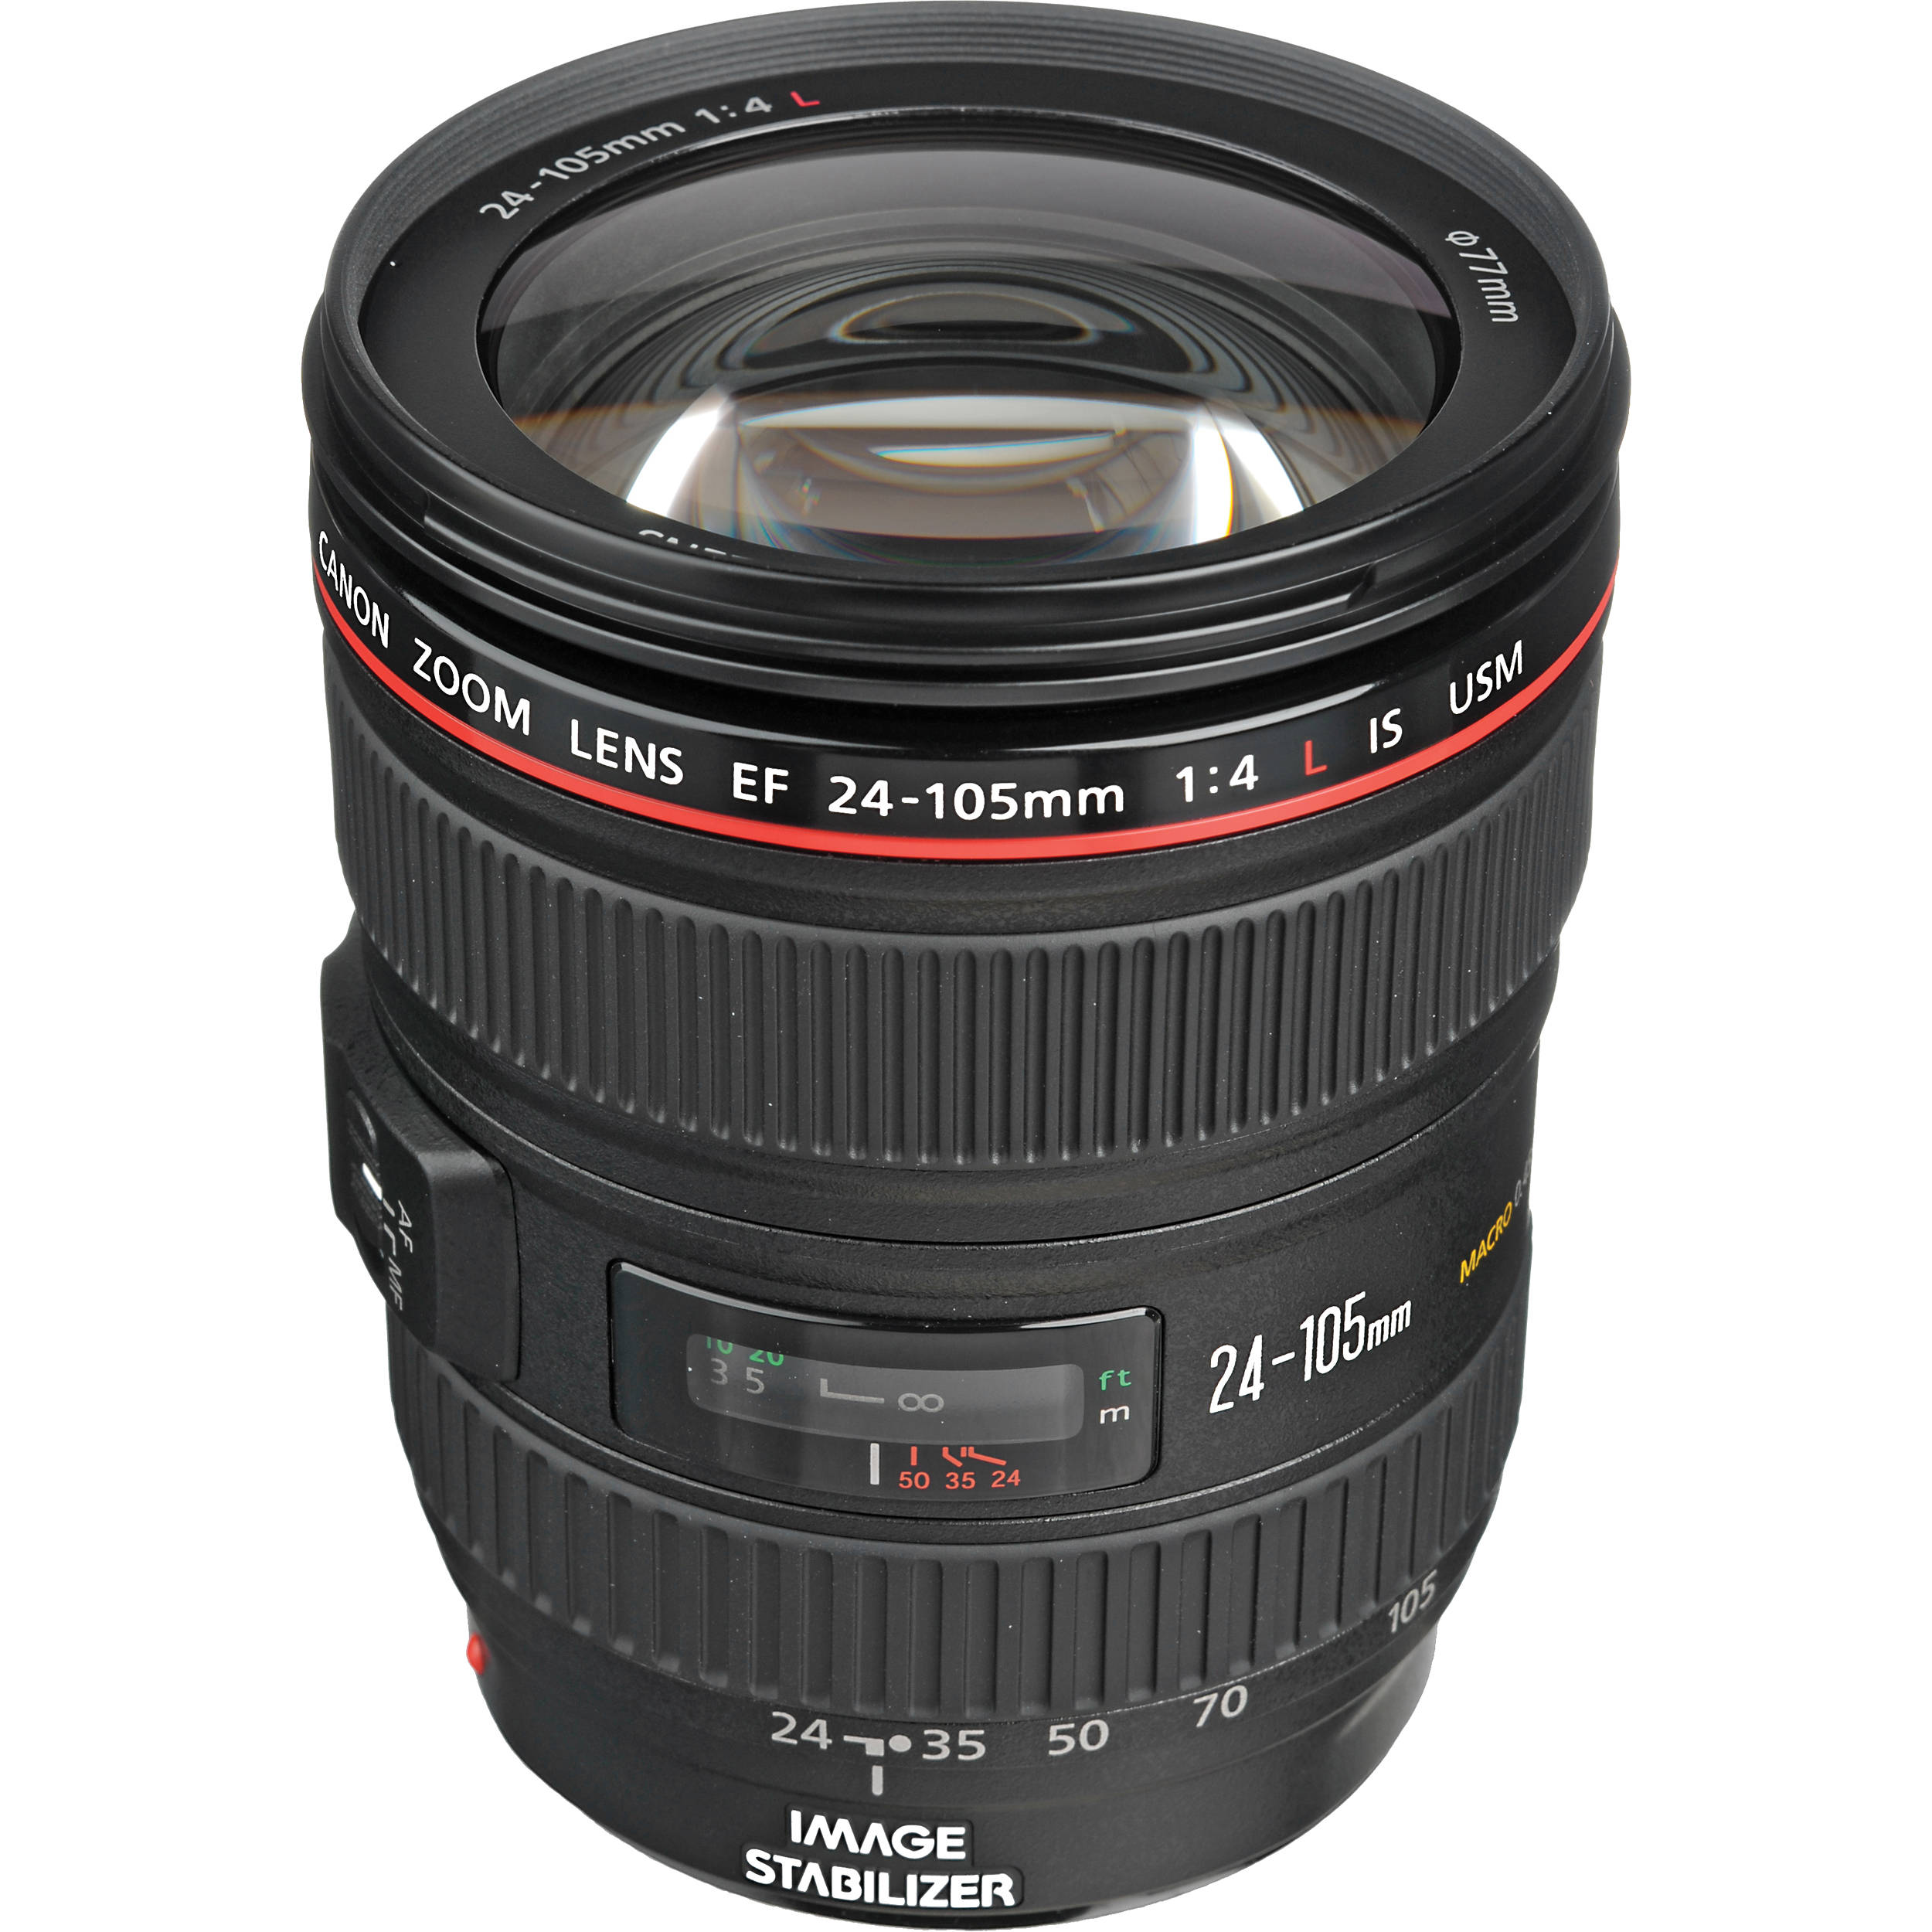 Canon EF 24-105mm f / 4L USM 이미지 스태빌라이저 렌즈 (77mm)...